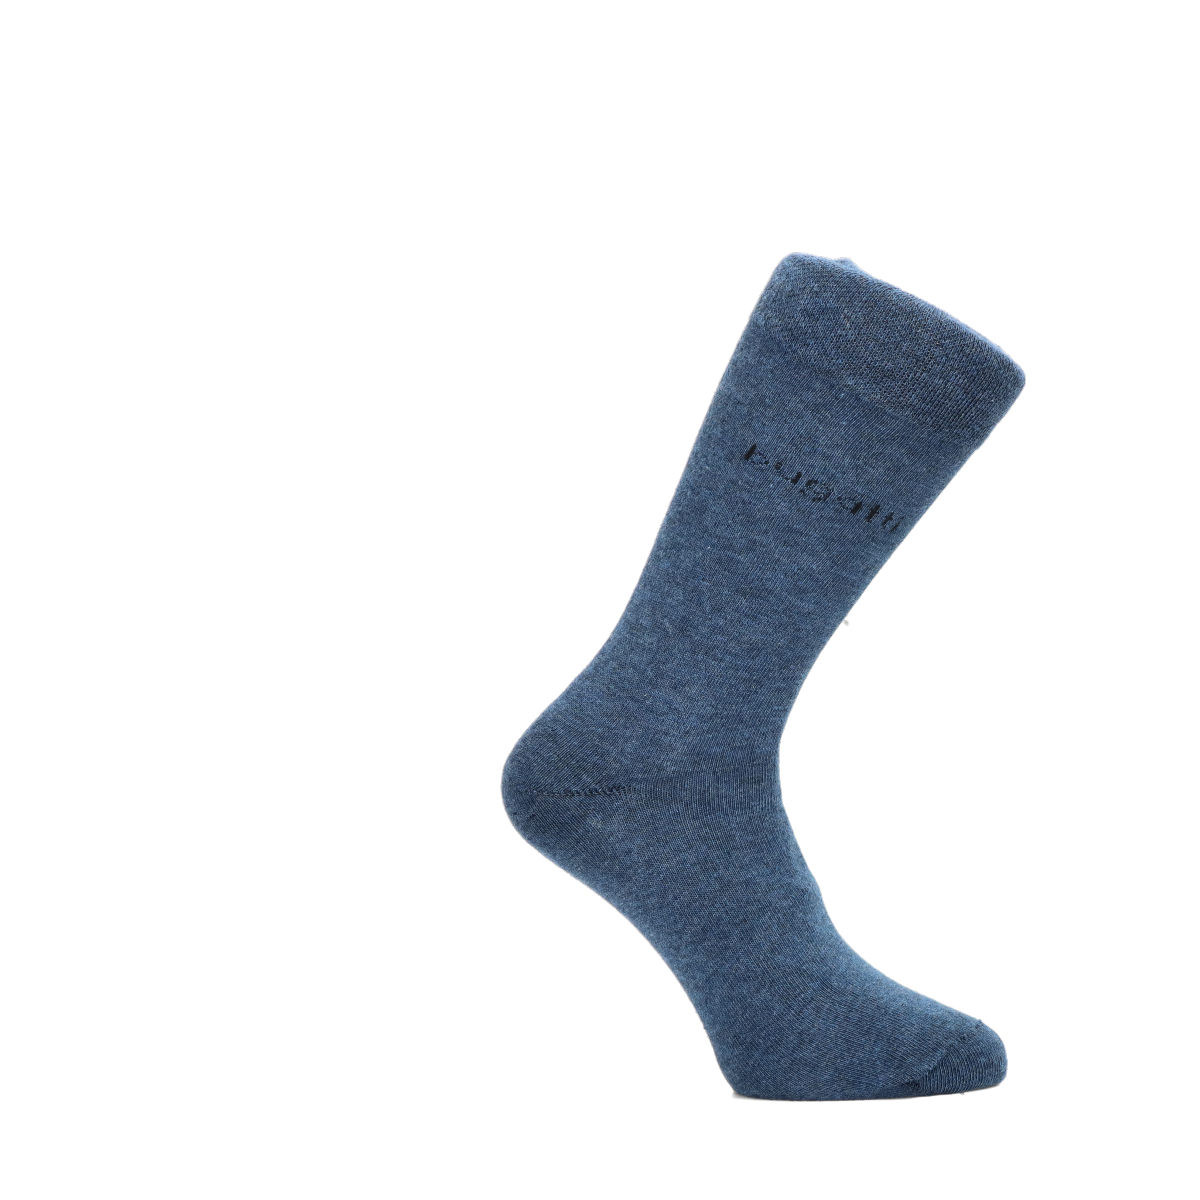 Bugatti men's classic socks - dark blue